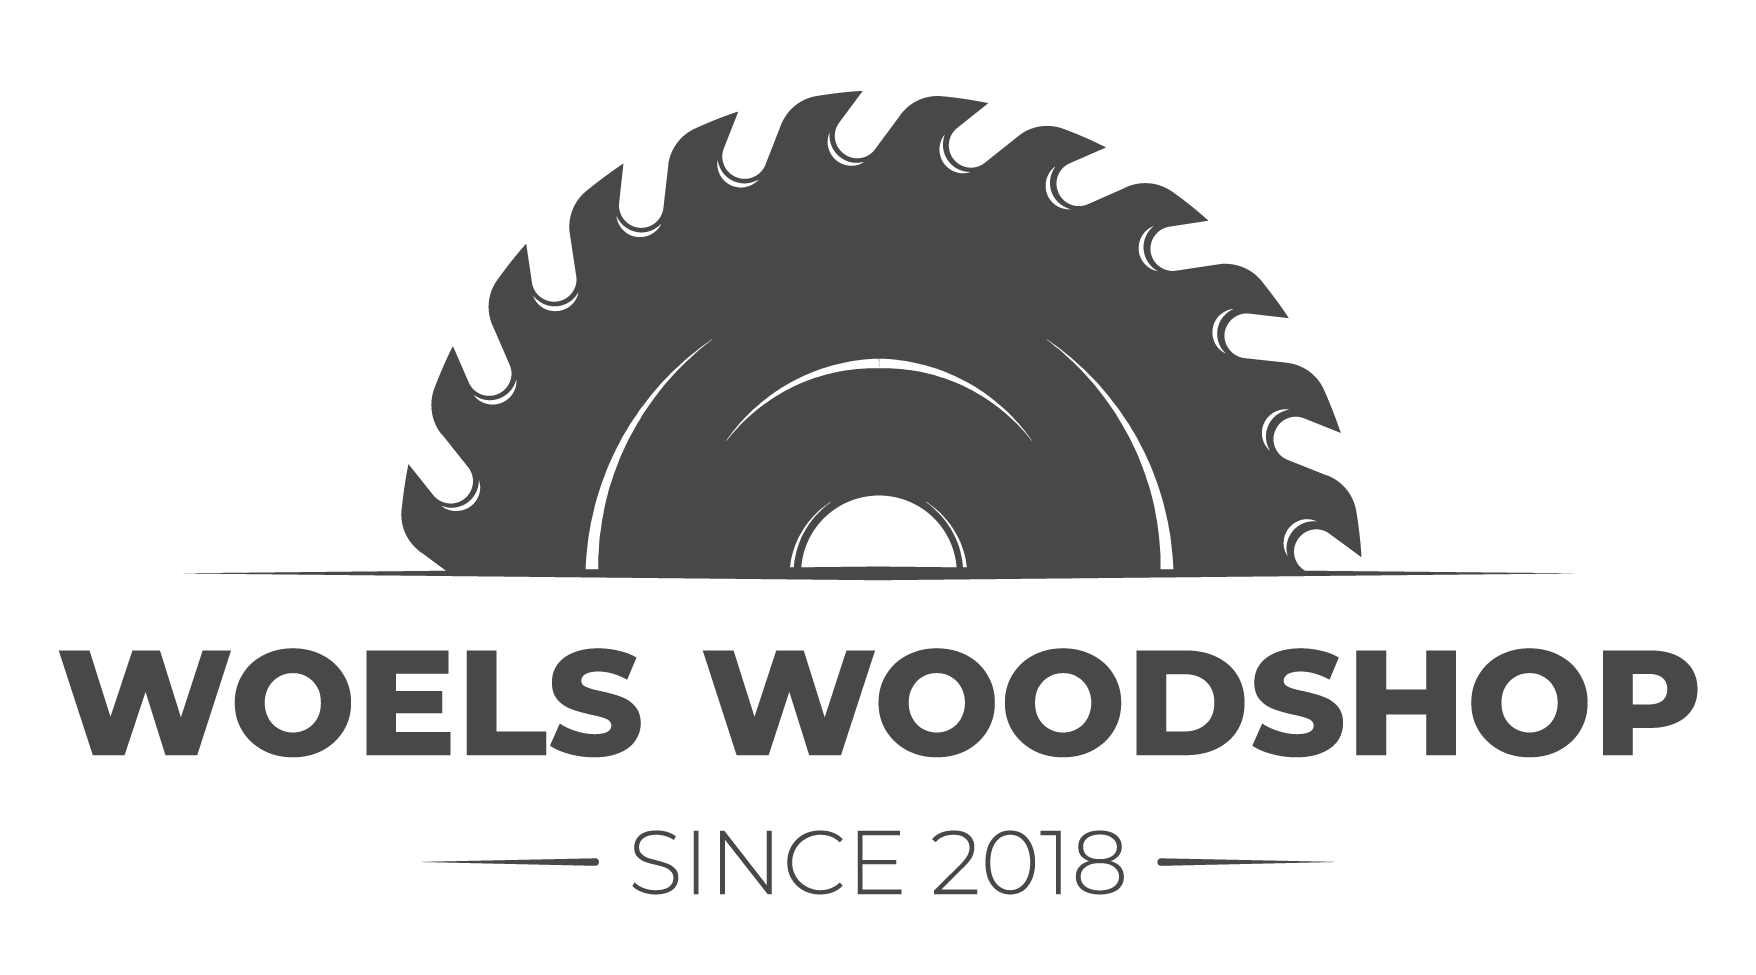 Woel's Woodshop